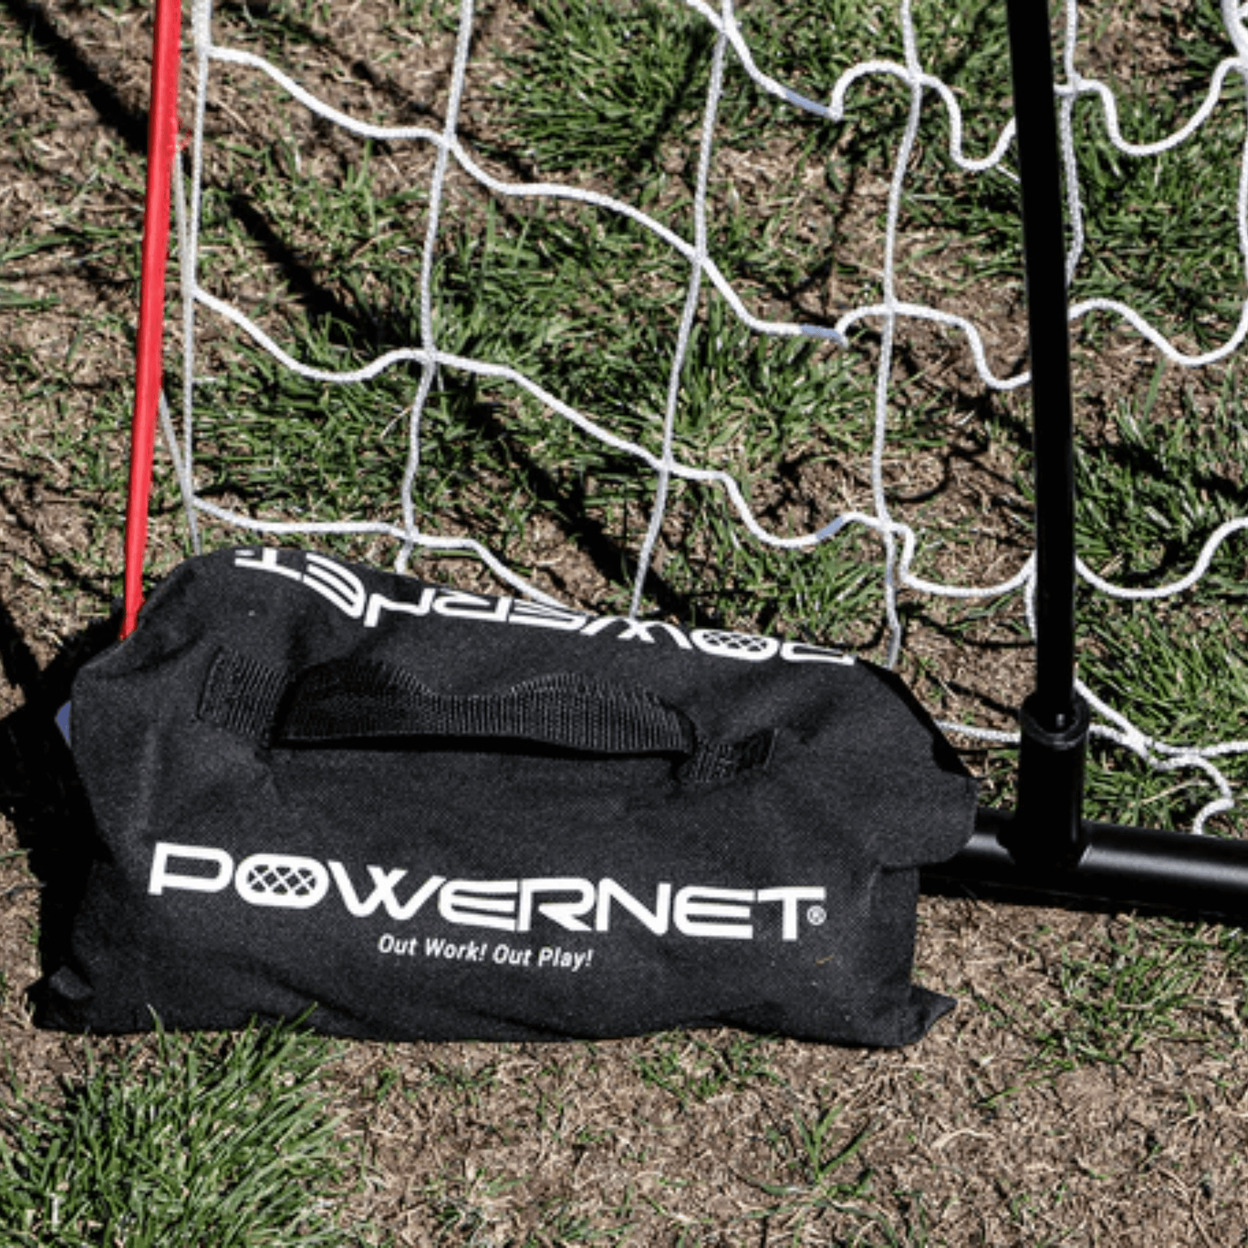 PowerNet 8x4 Ultra Light Weight Soccer Goal With Sandbags ()